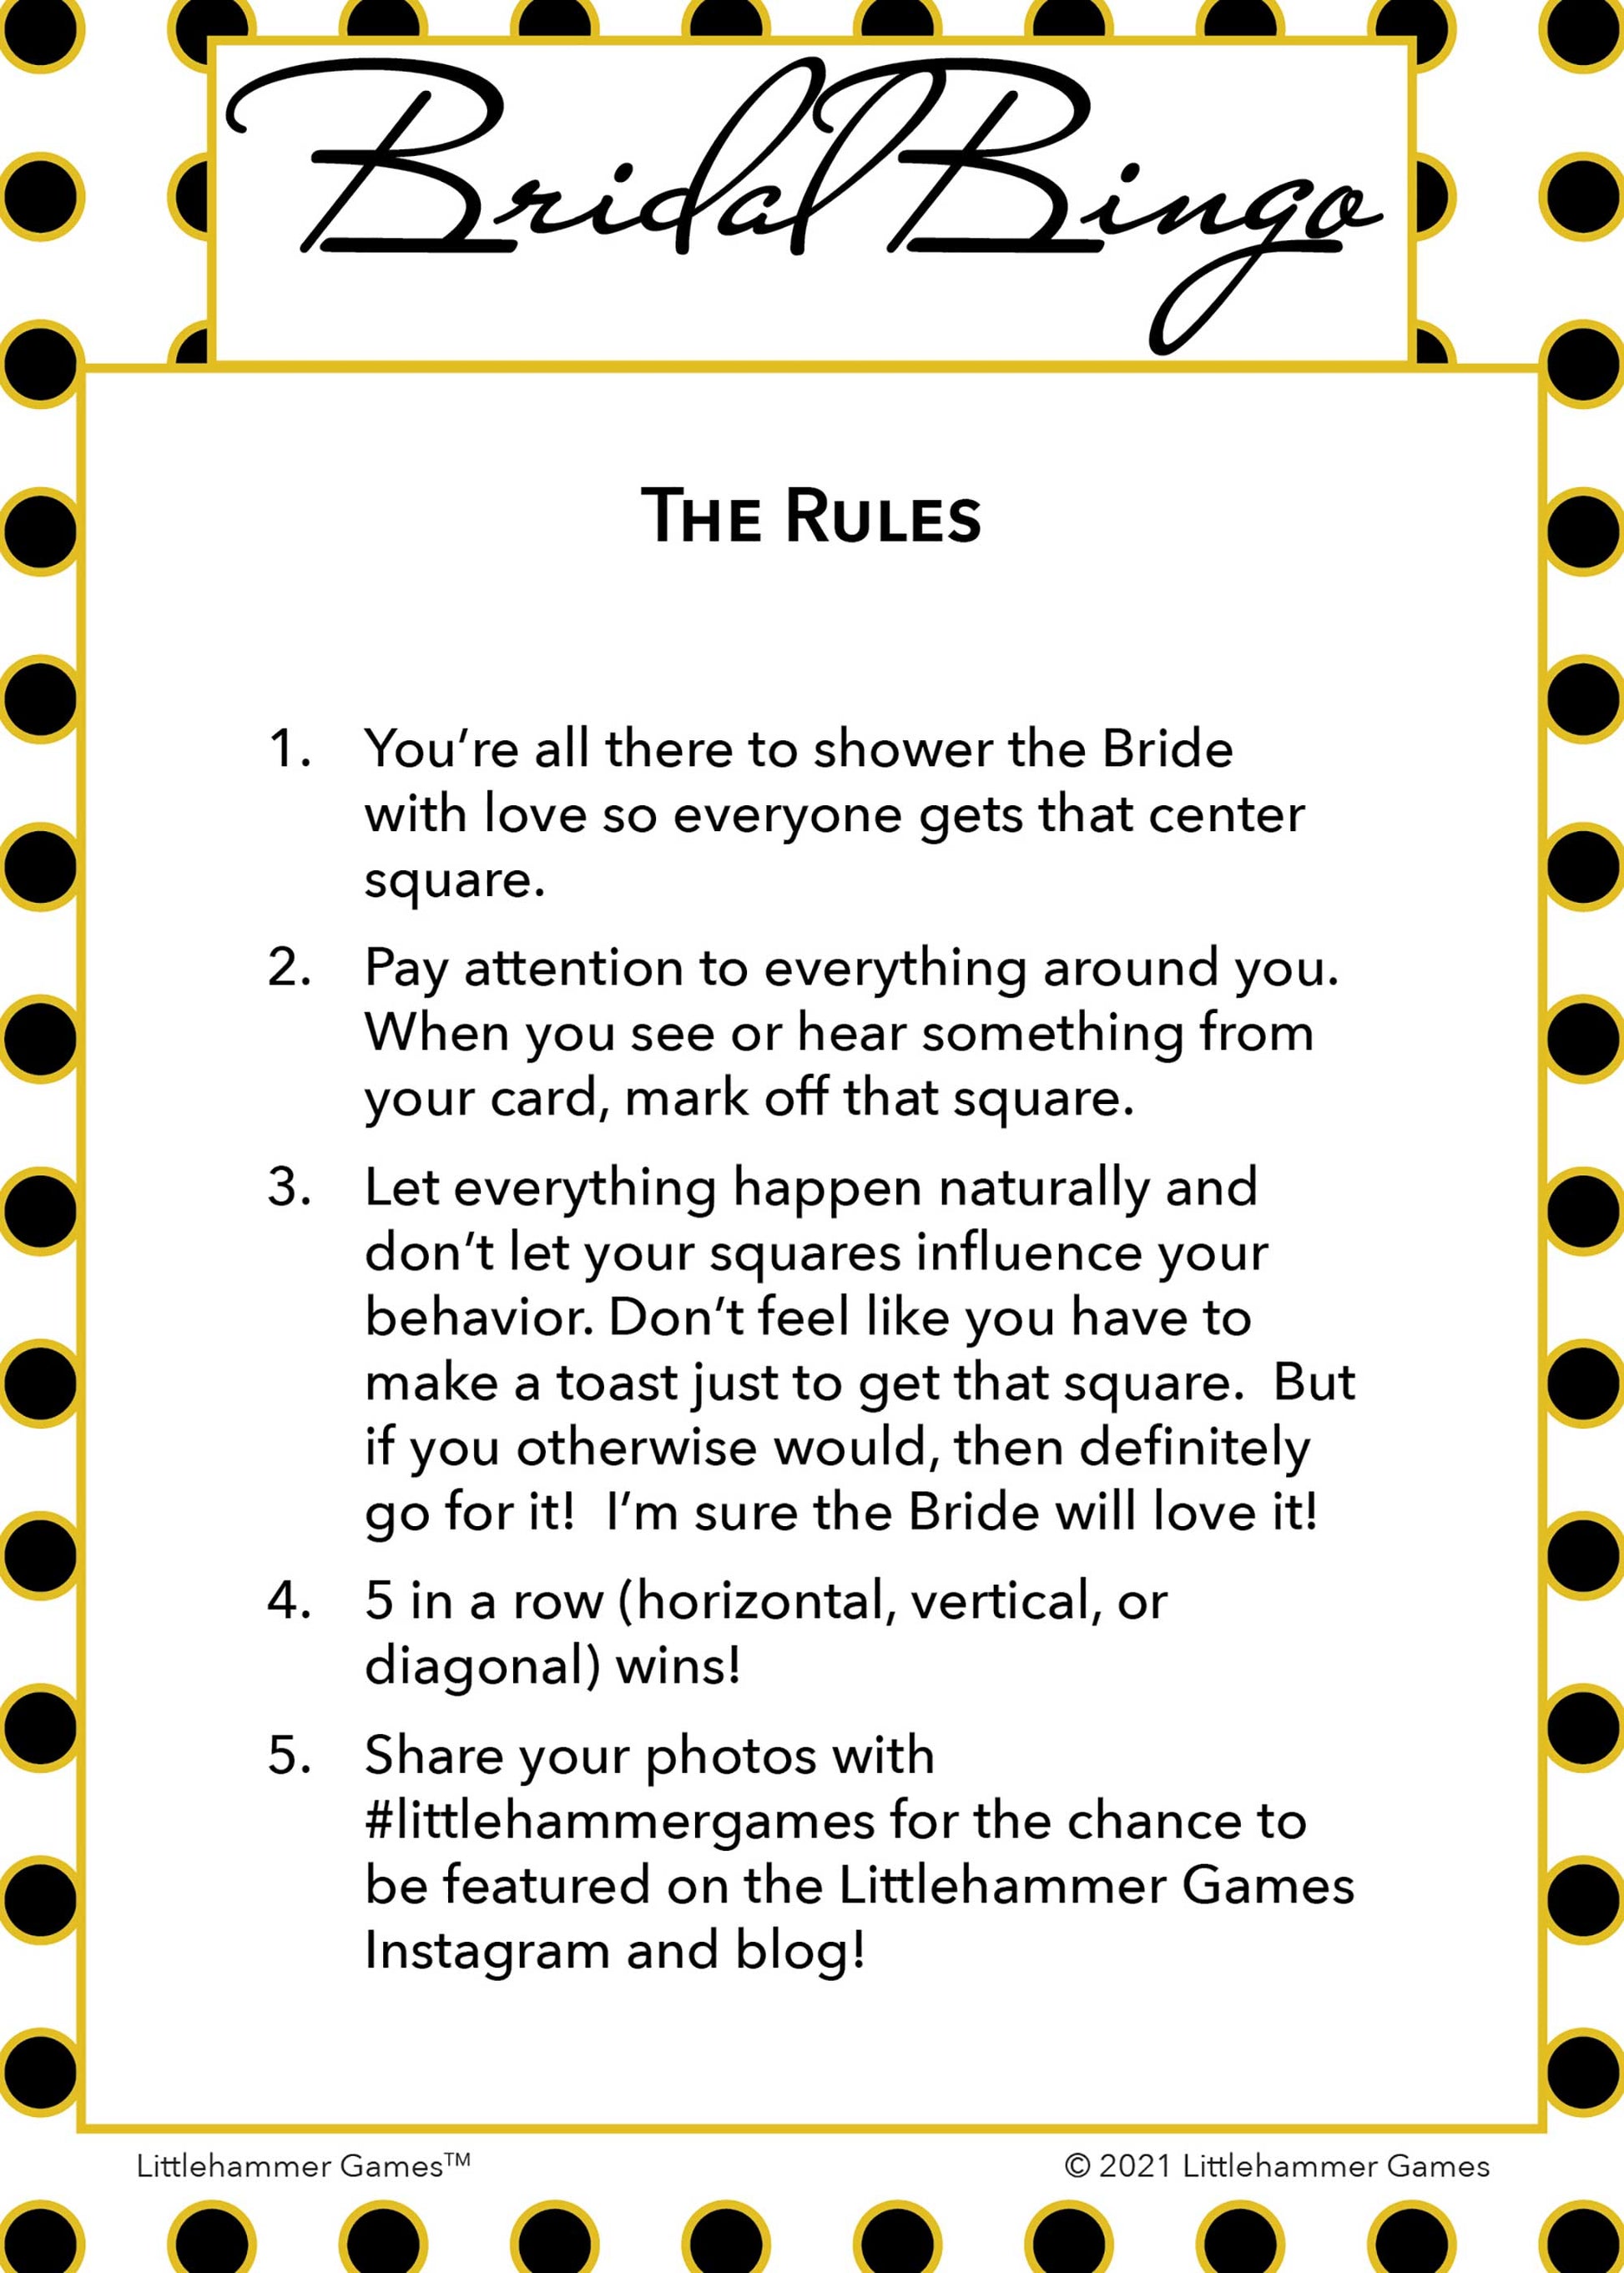 Bridal Bingo rules card on a black and gold polka dot background